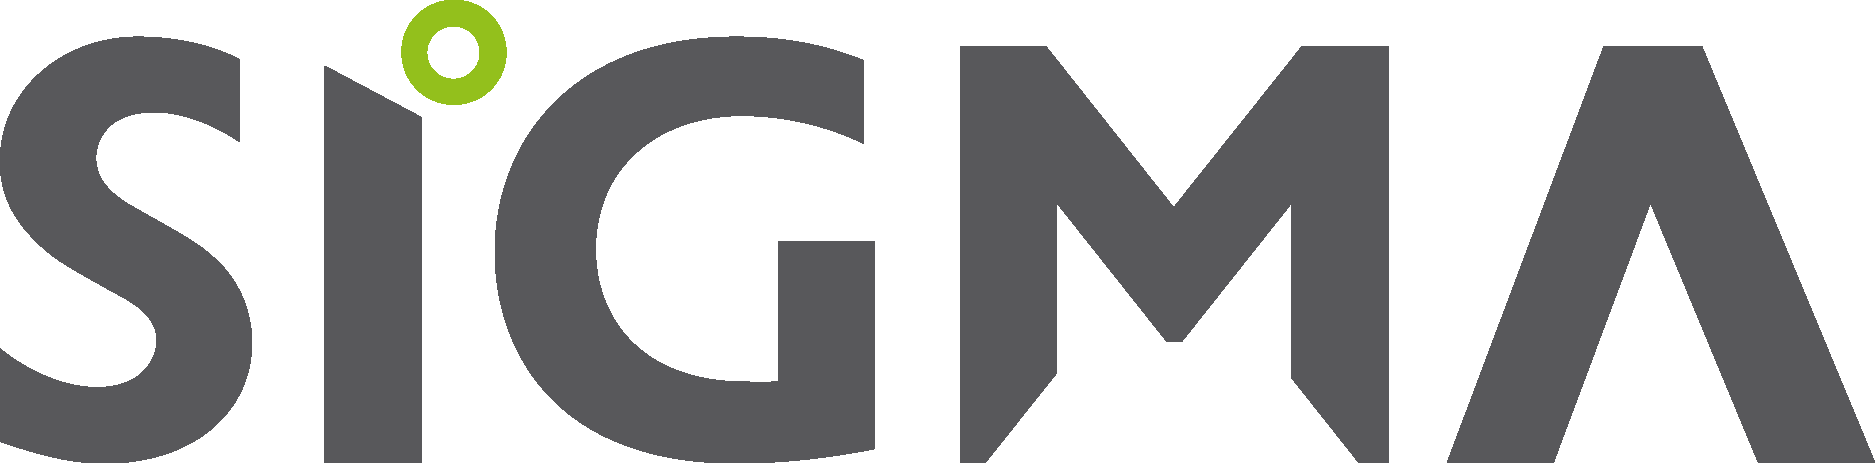 Sigma лого. Логотип Sigma Corporation. Сигмакс логотип. Sigma Oil лого. Sigma download